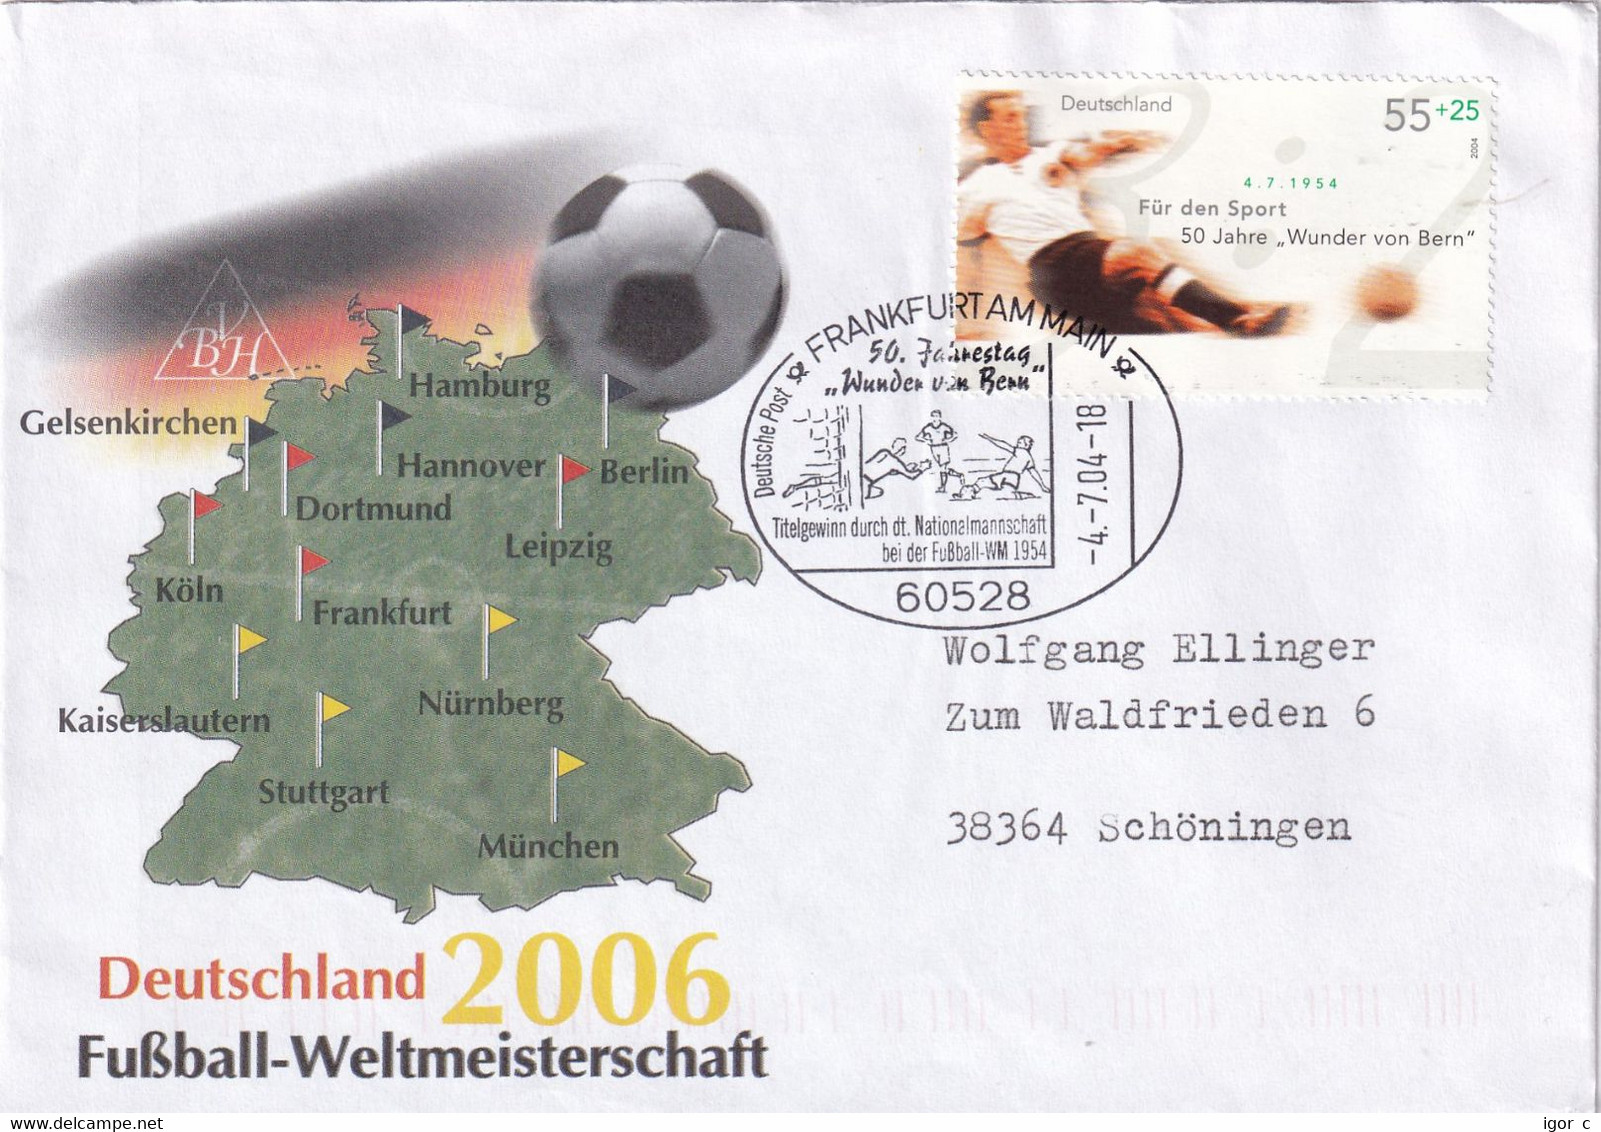 Germany 2004 Cover; Football Fussball Soccer Calcio: FIFA World Cup 1954: 50 Jahre Wunder Von Bern; 2006 Host Cities - 1954 – Switzerland